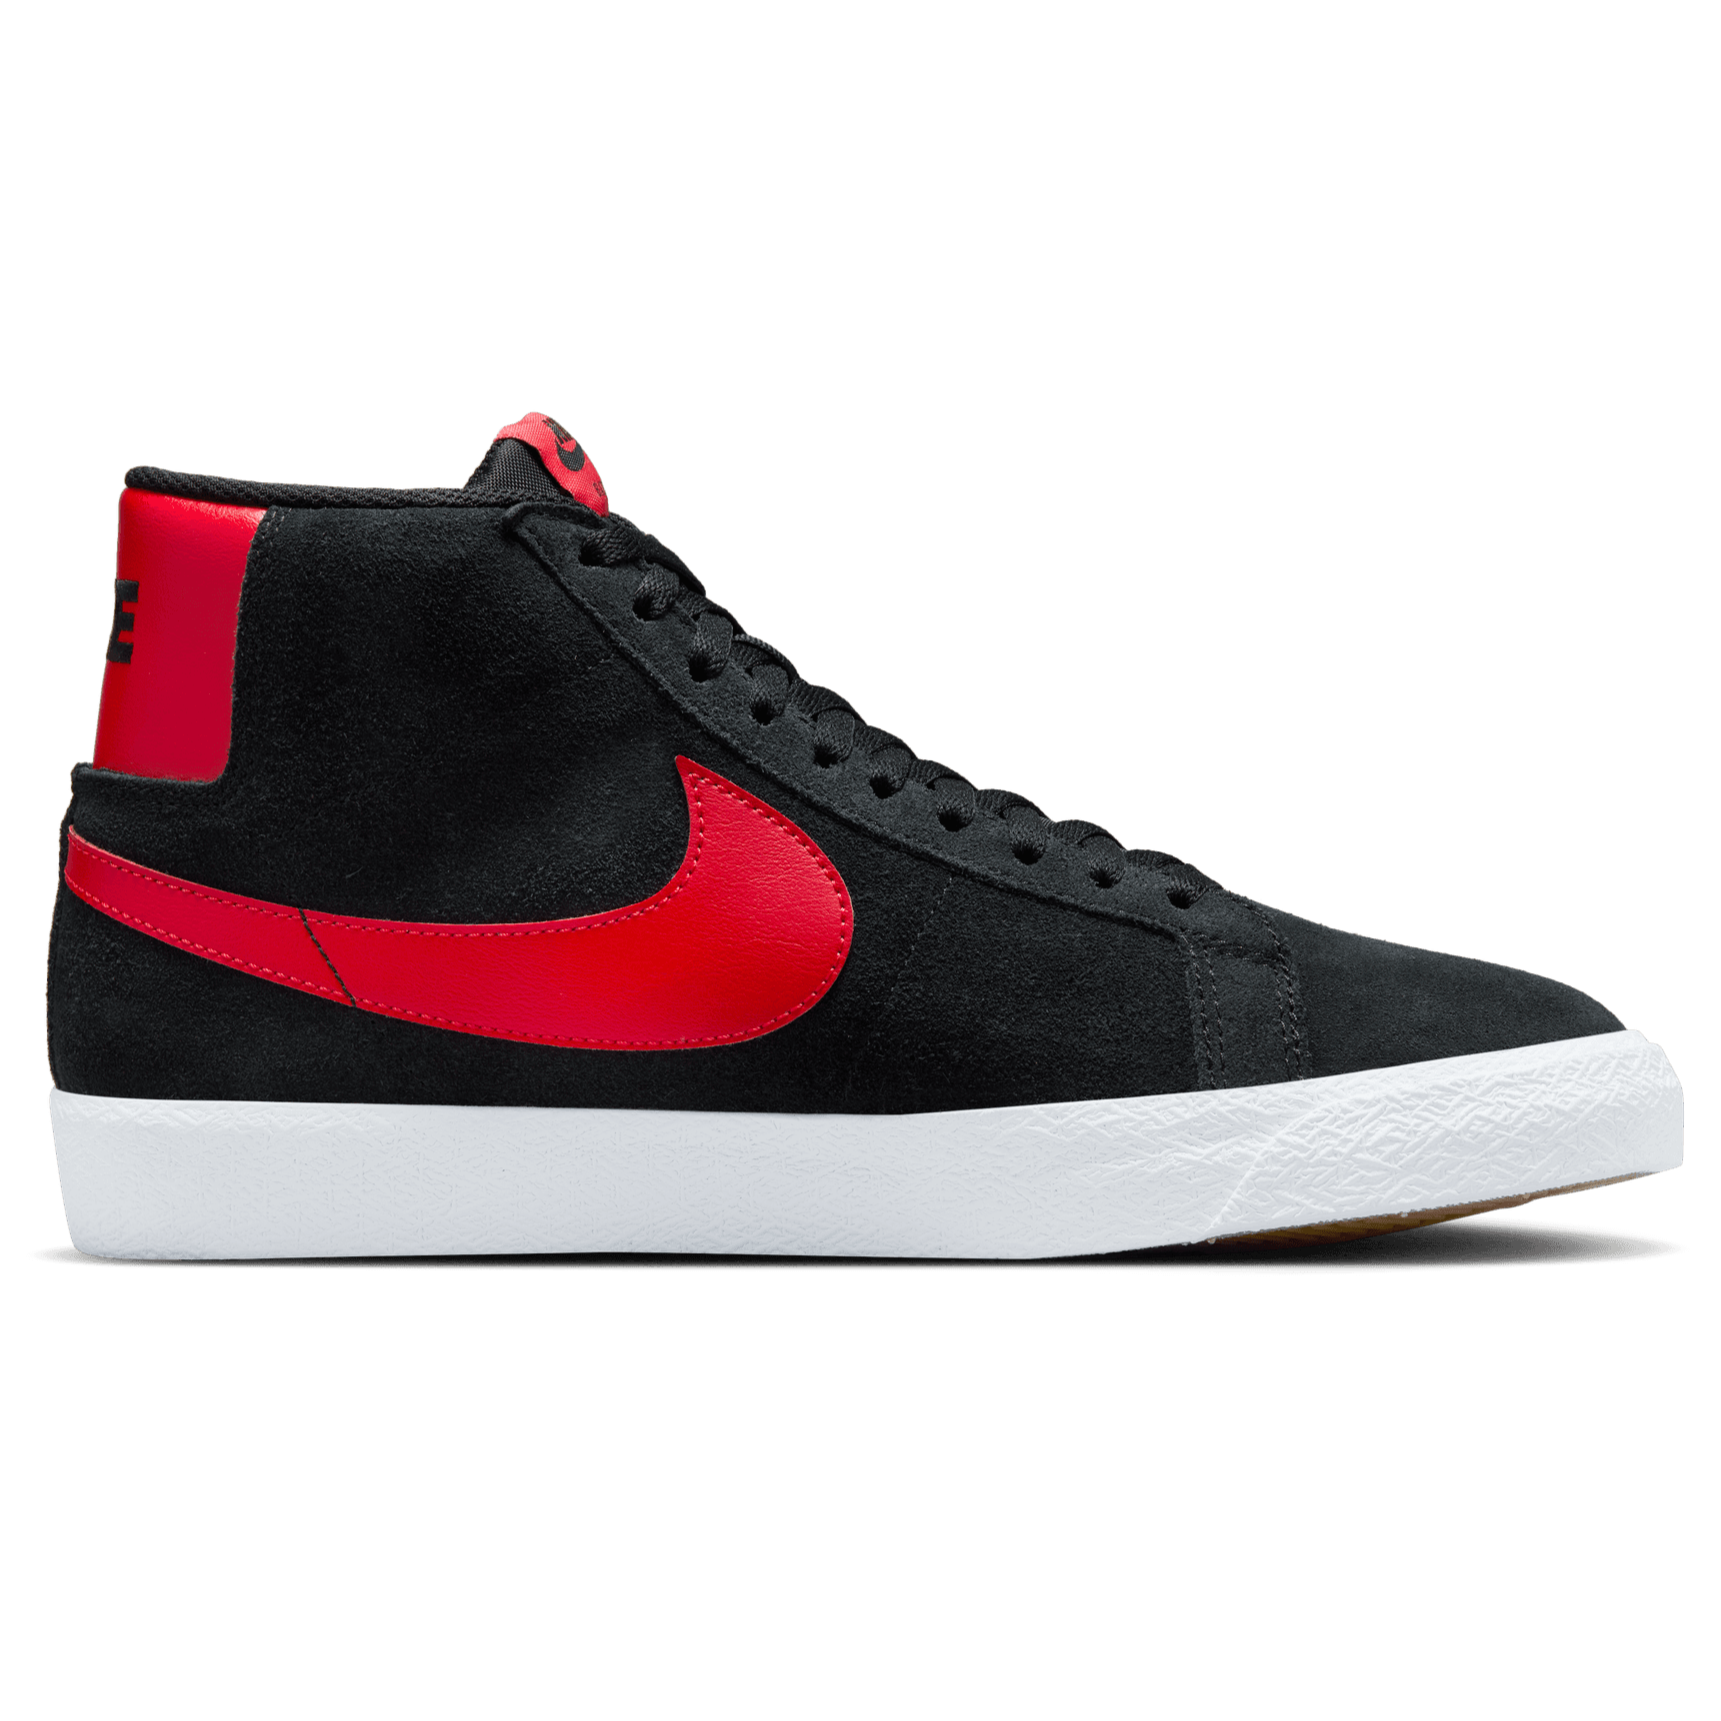 Black/Red Blazer Mid Nike SB Skate Shoe